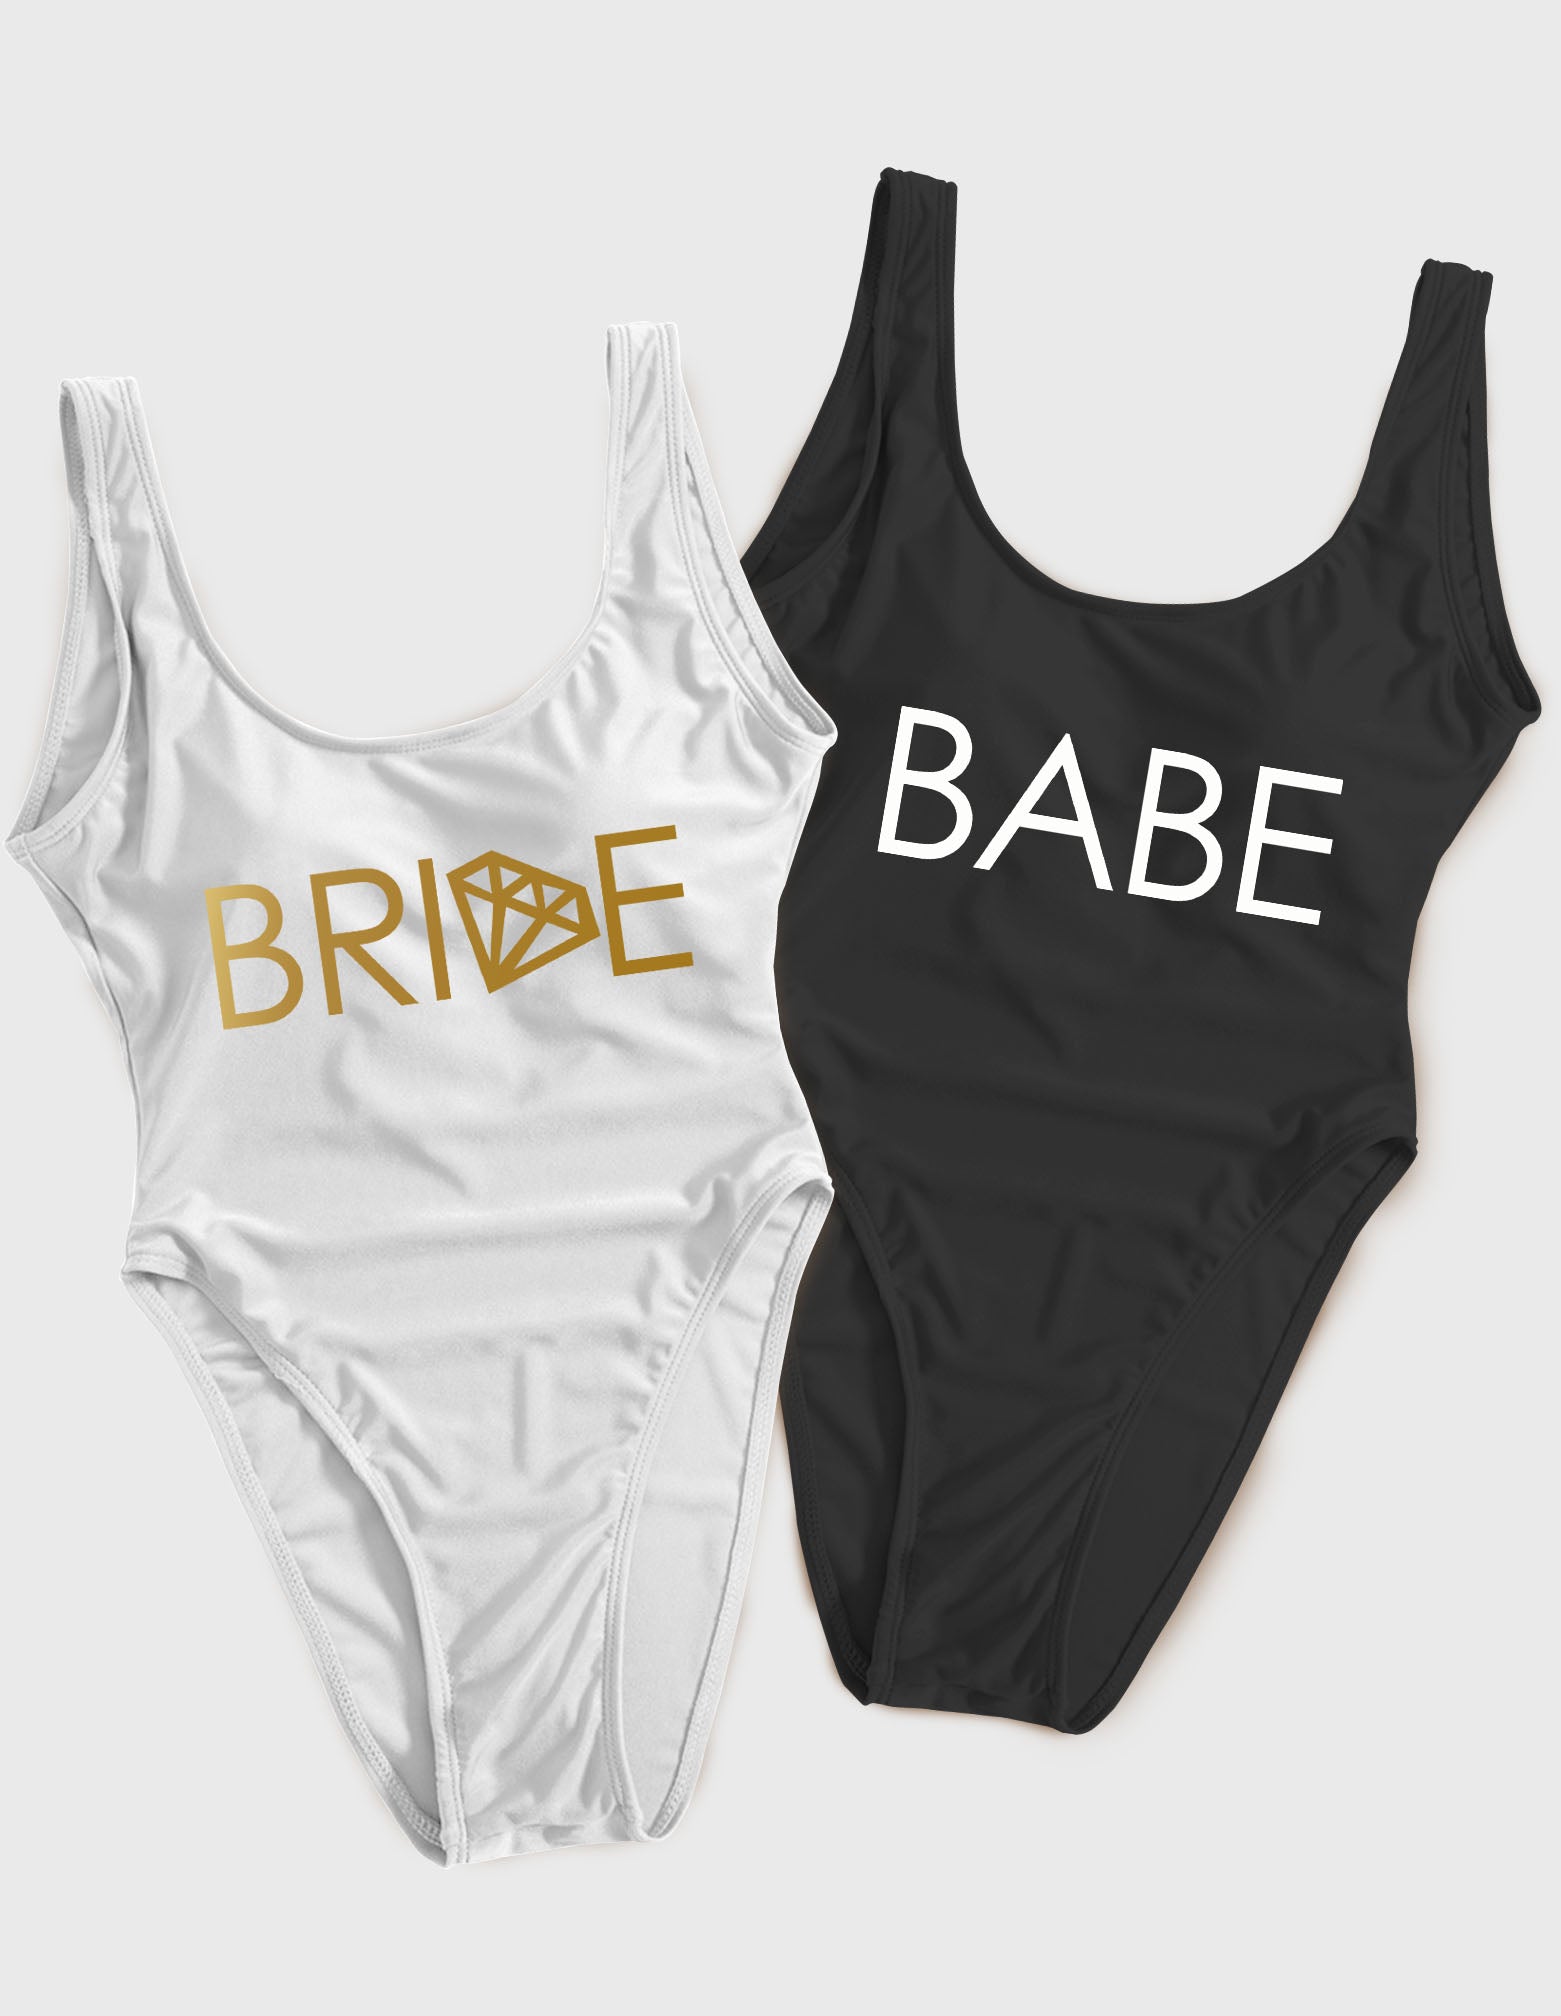 Bride & Babe Diamond Style Bachelorette Swimsuit